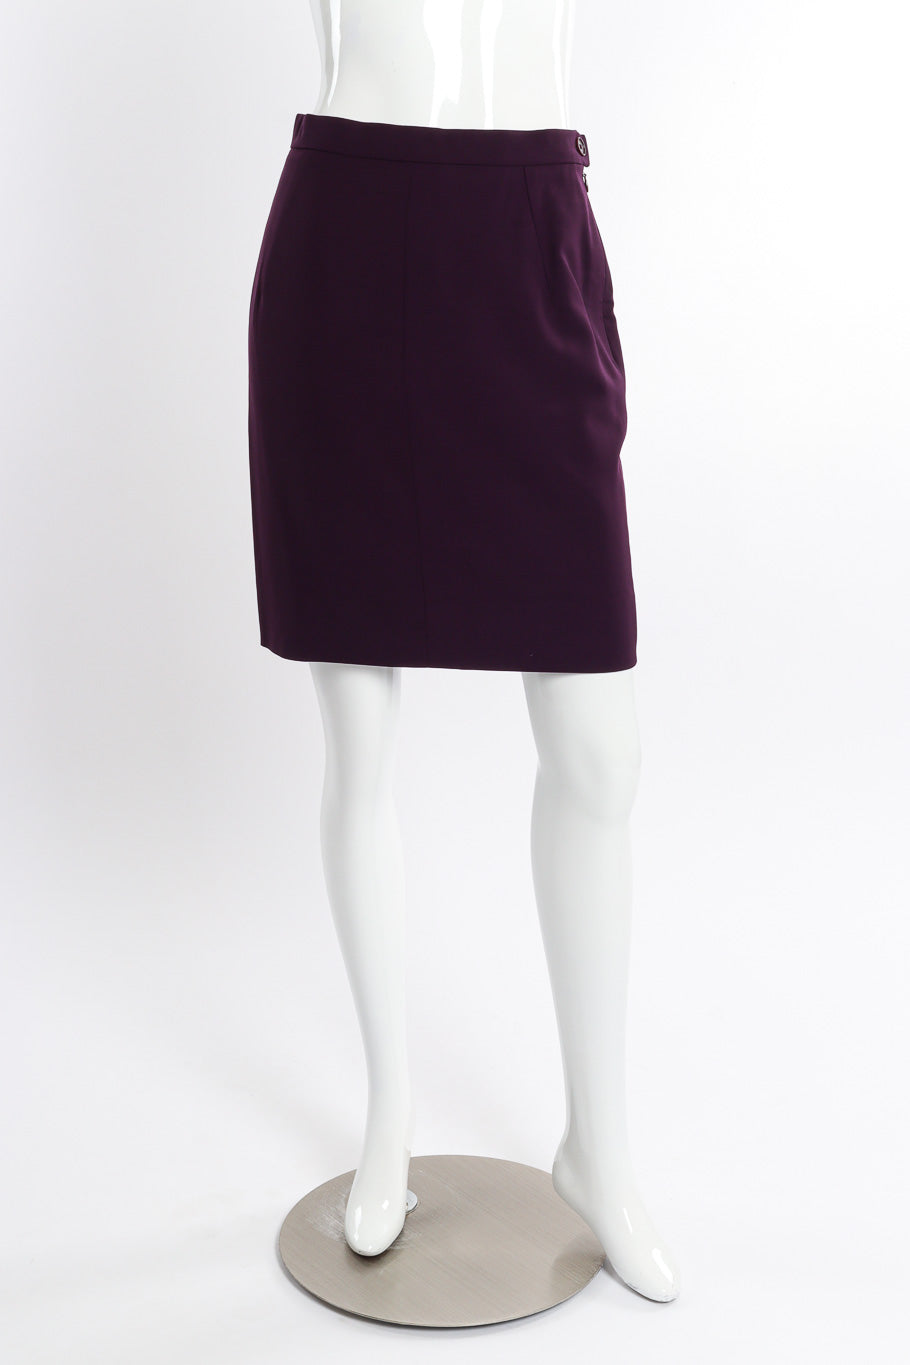 Vintage Hermés Asymmetrical Blazer and Skirt Set skirt front view on mannequin @recessla